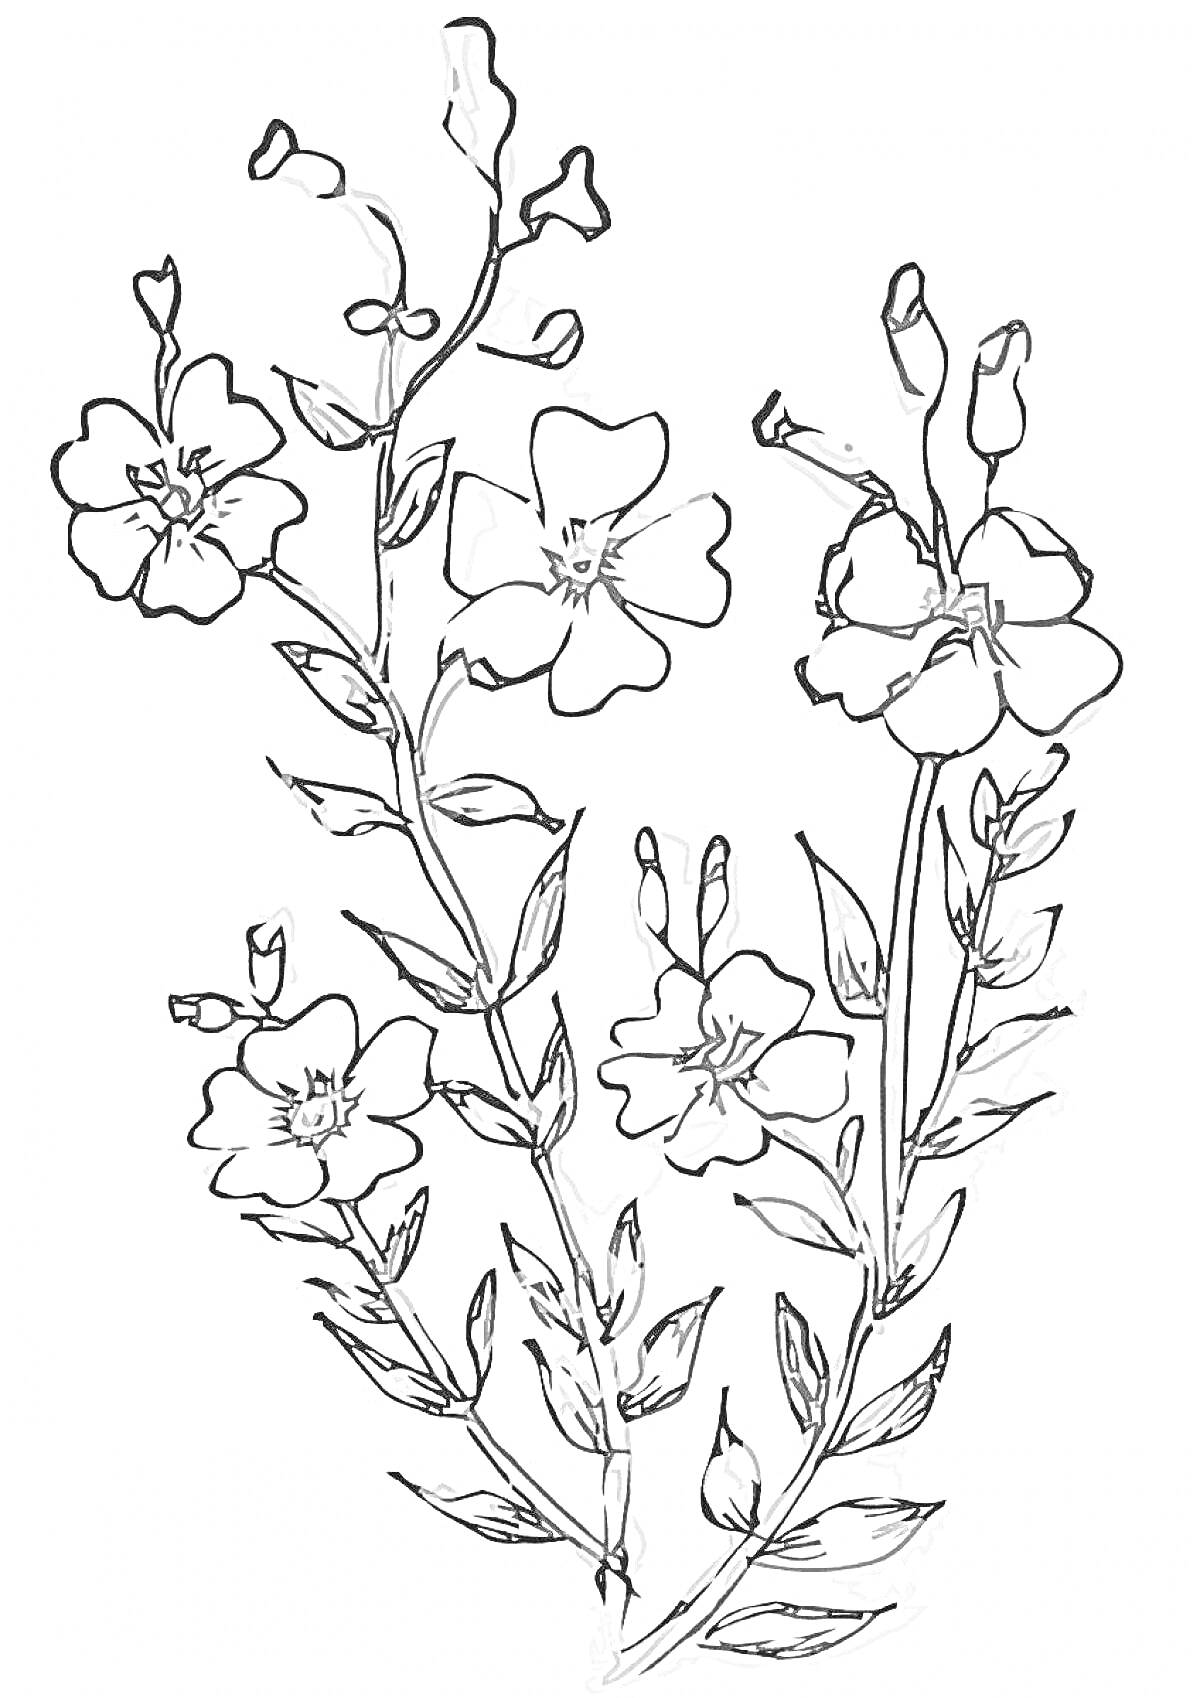 Раскраска Рисунок с цветущими стеблями льна